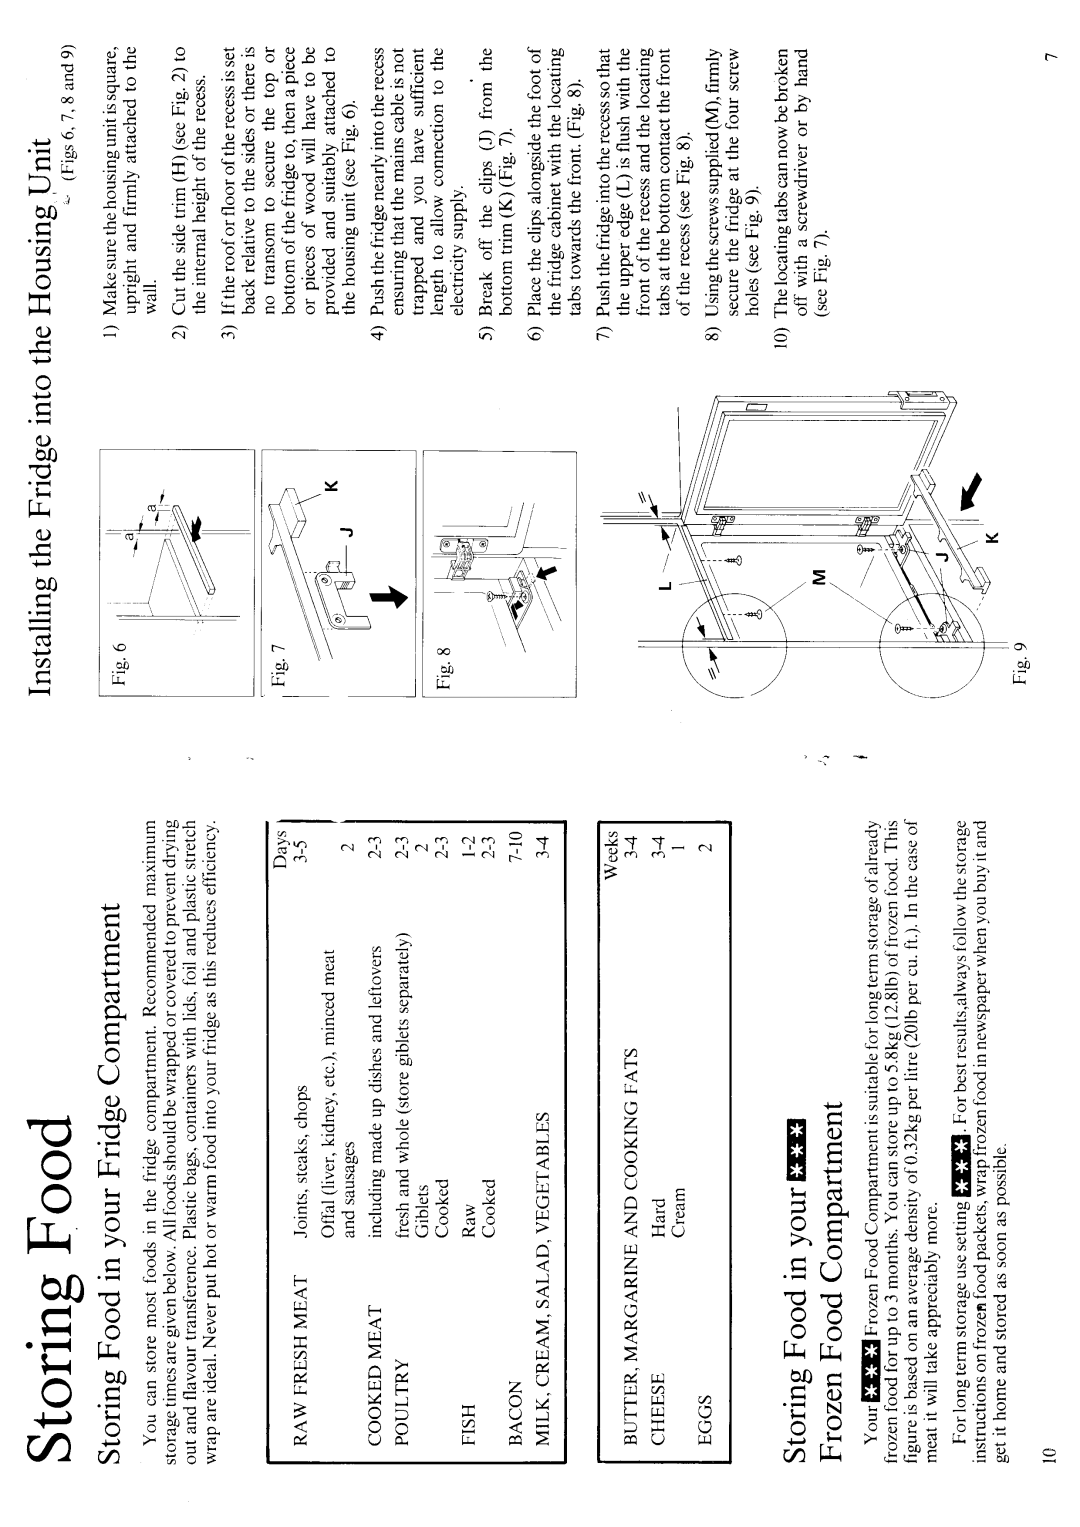 Hotpoint 6980 manual 